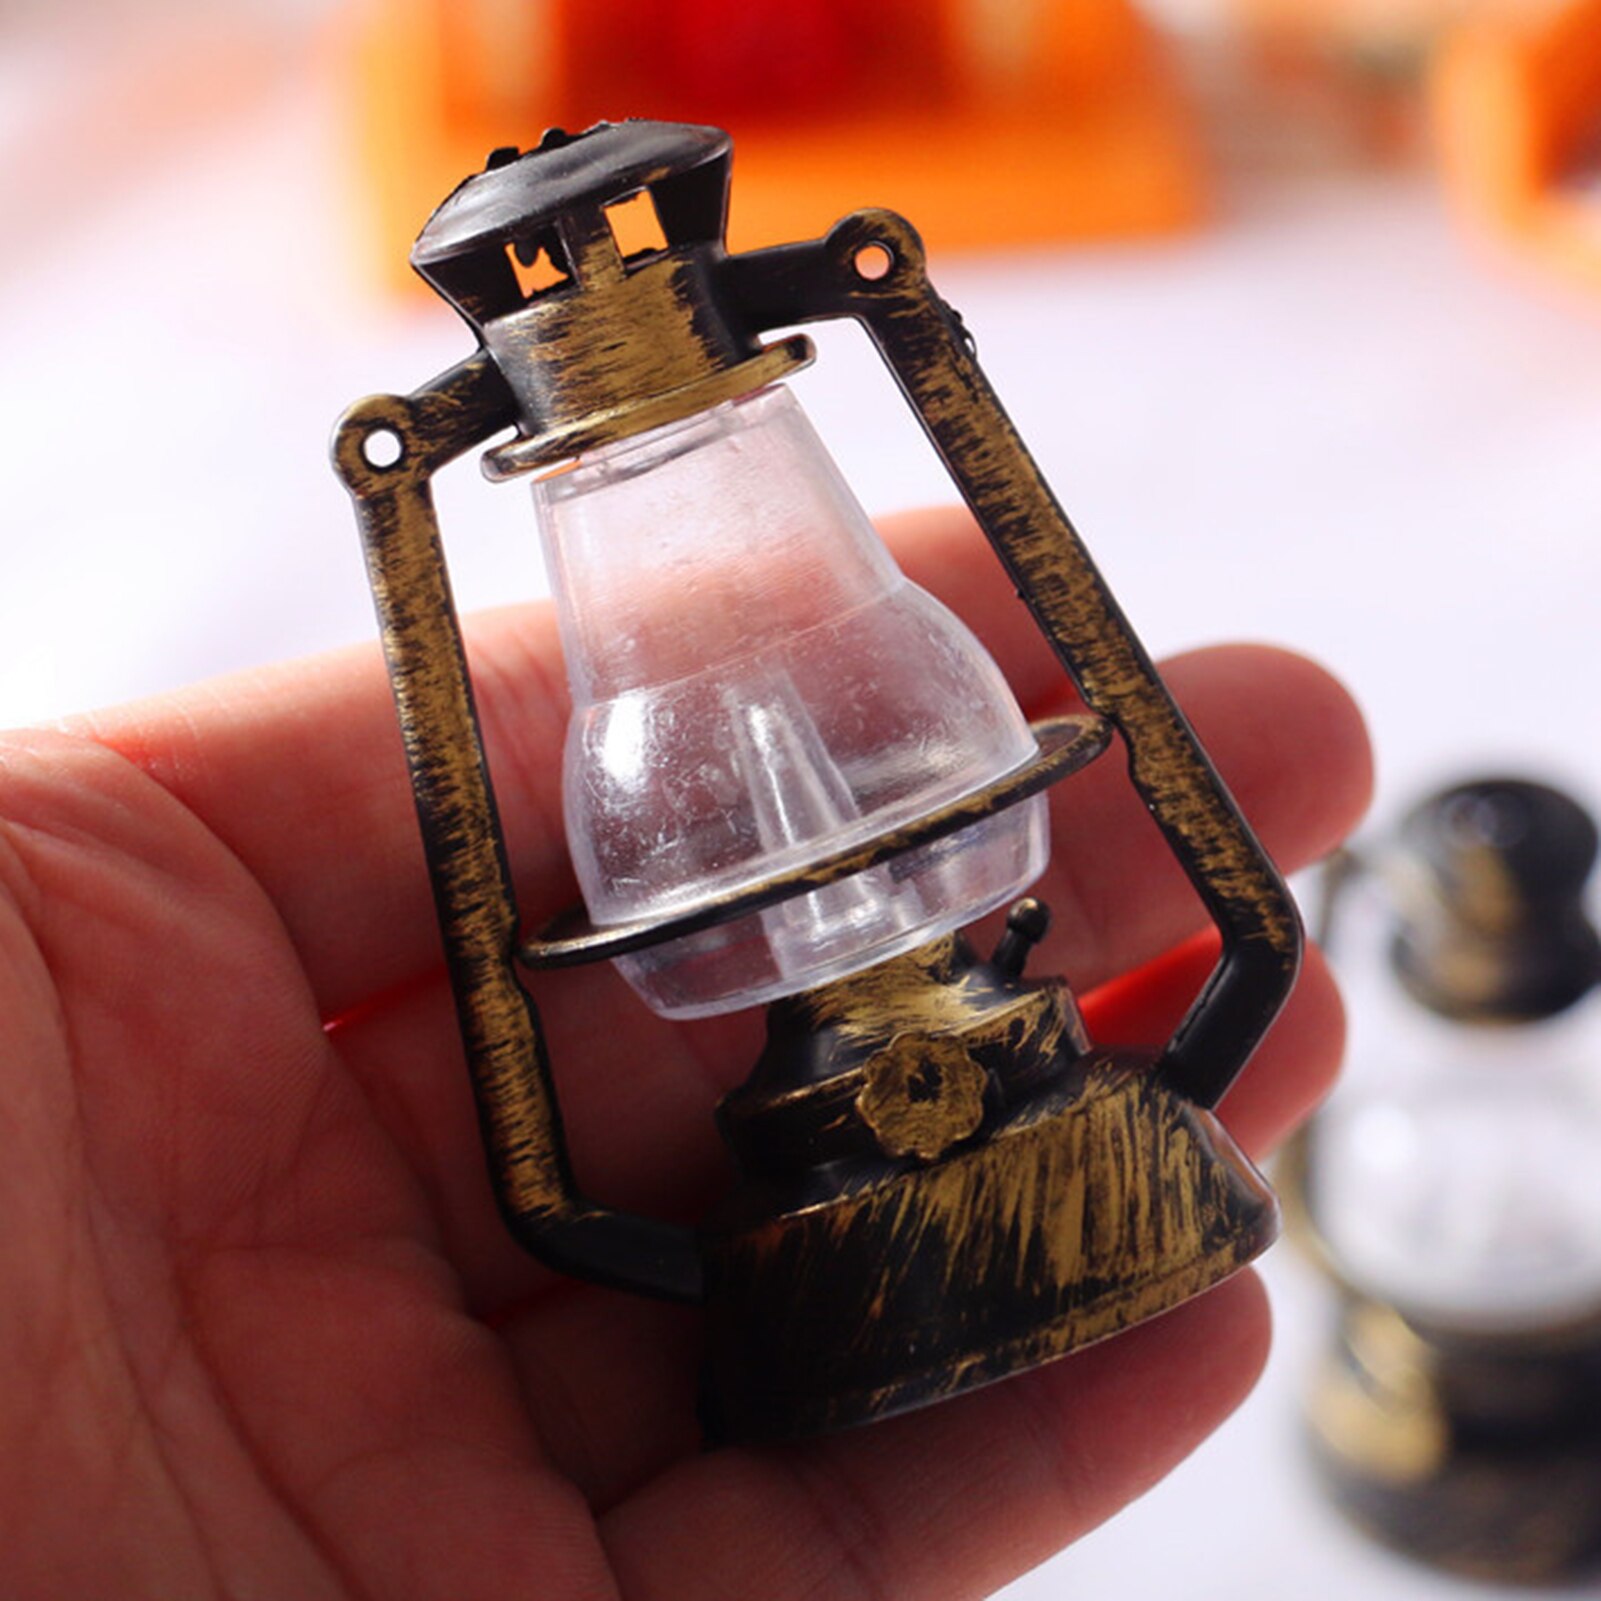 Dukkehus miniature retro lanterne parafin lampe spille scene ornamenter dekoration